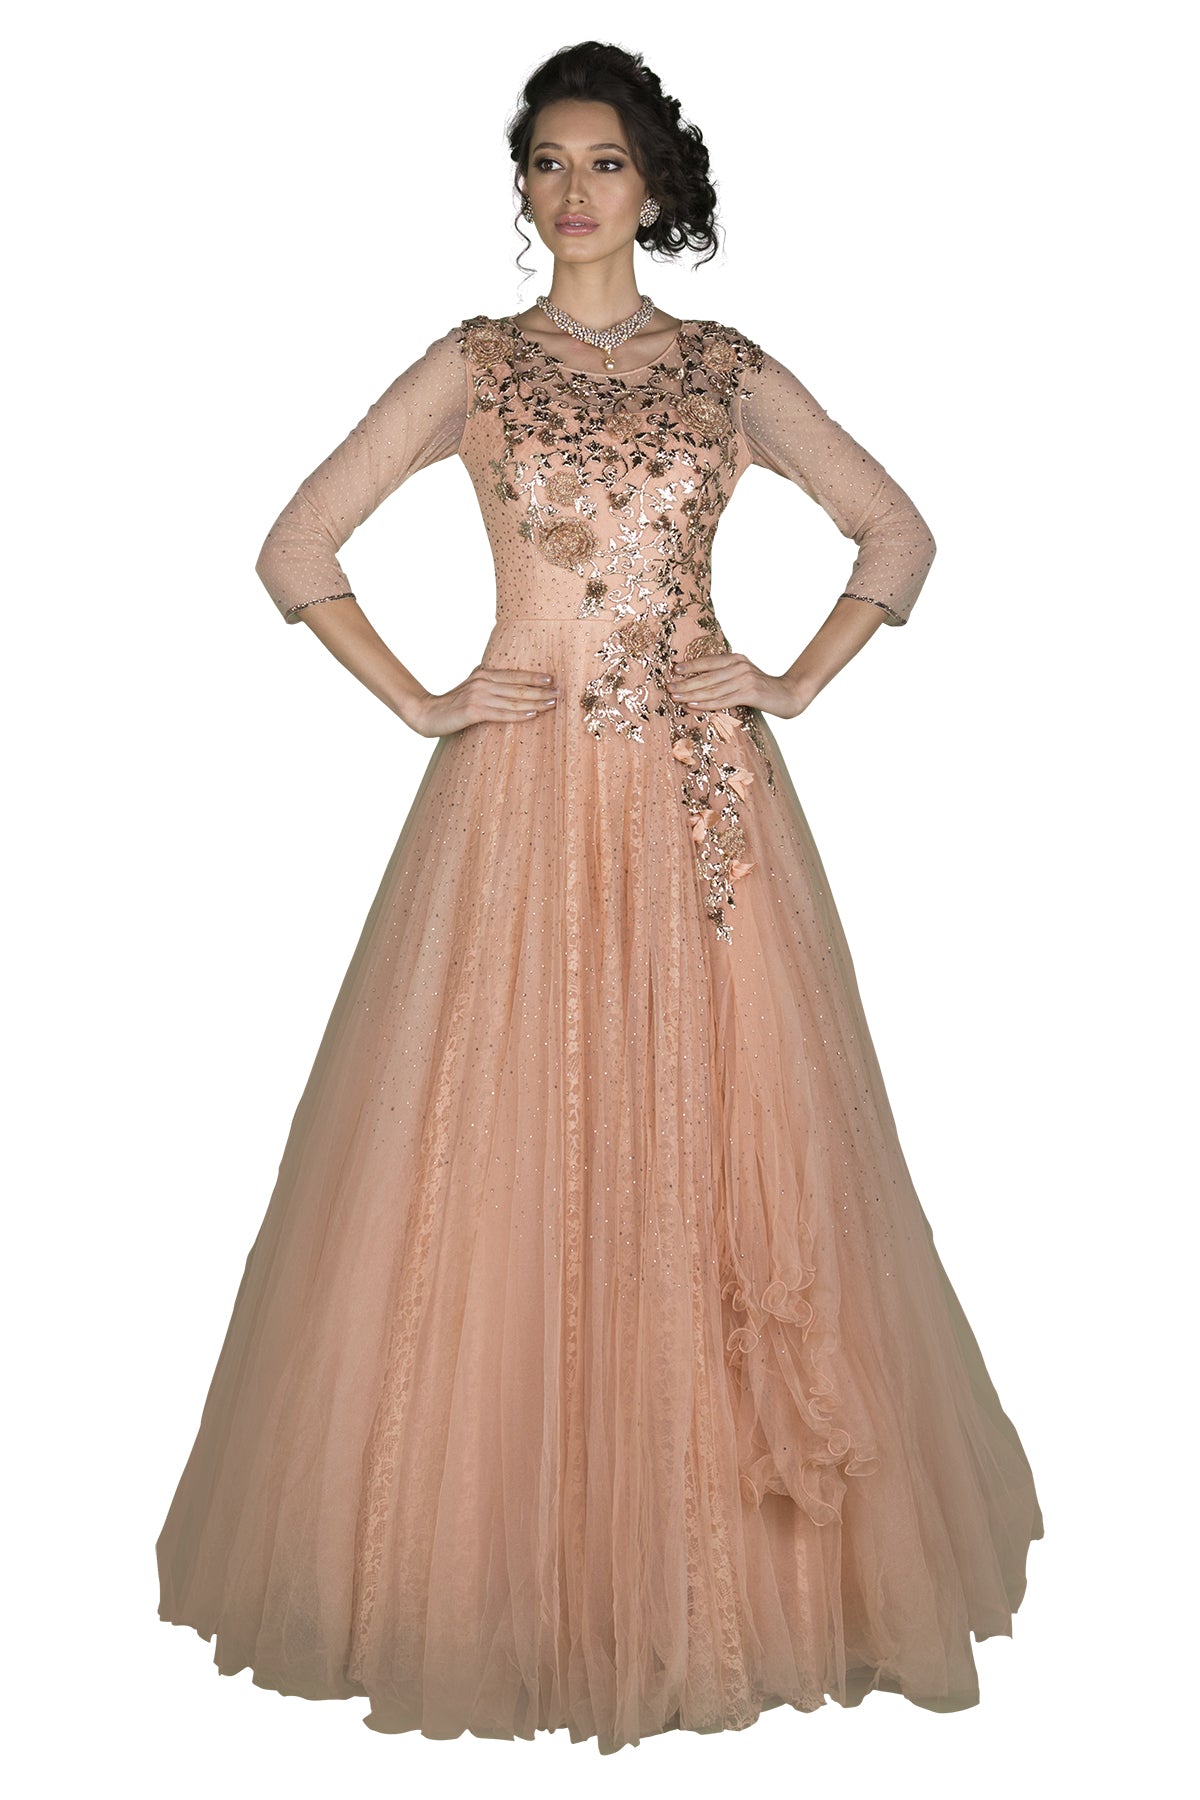 Peach Ball Gown 8122 | Clarisse – Clarisse Designs